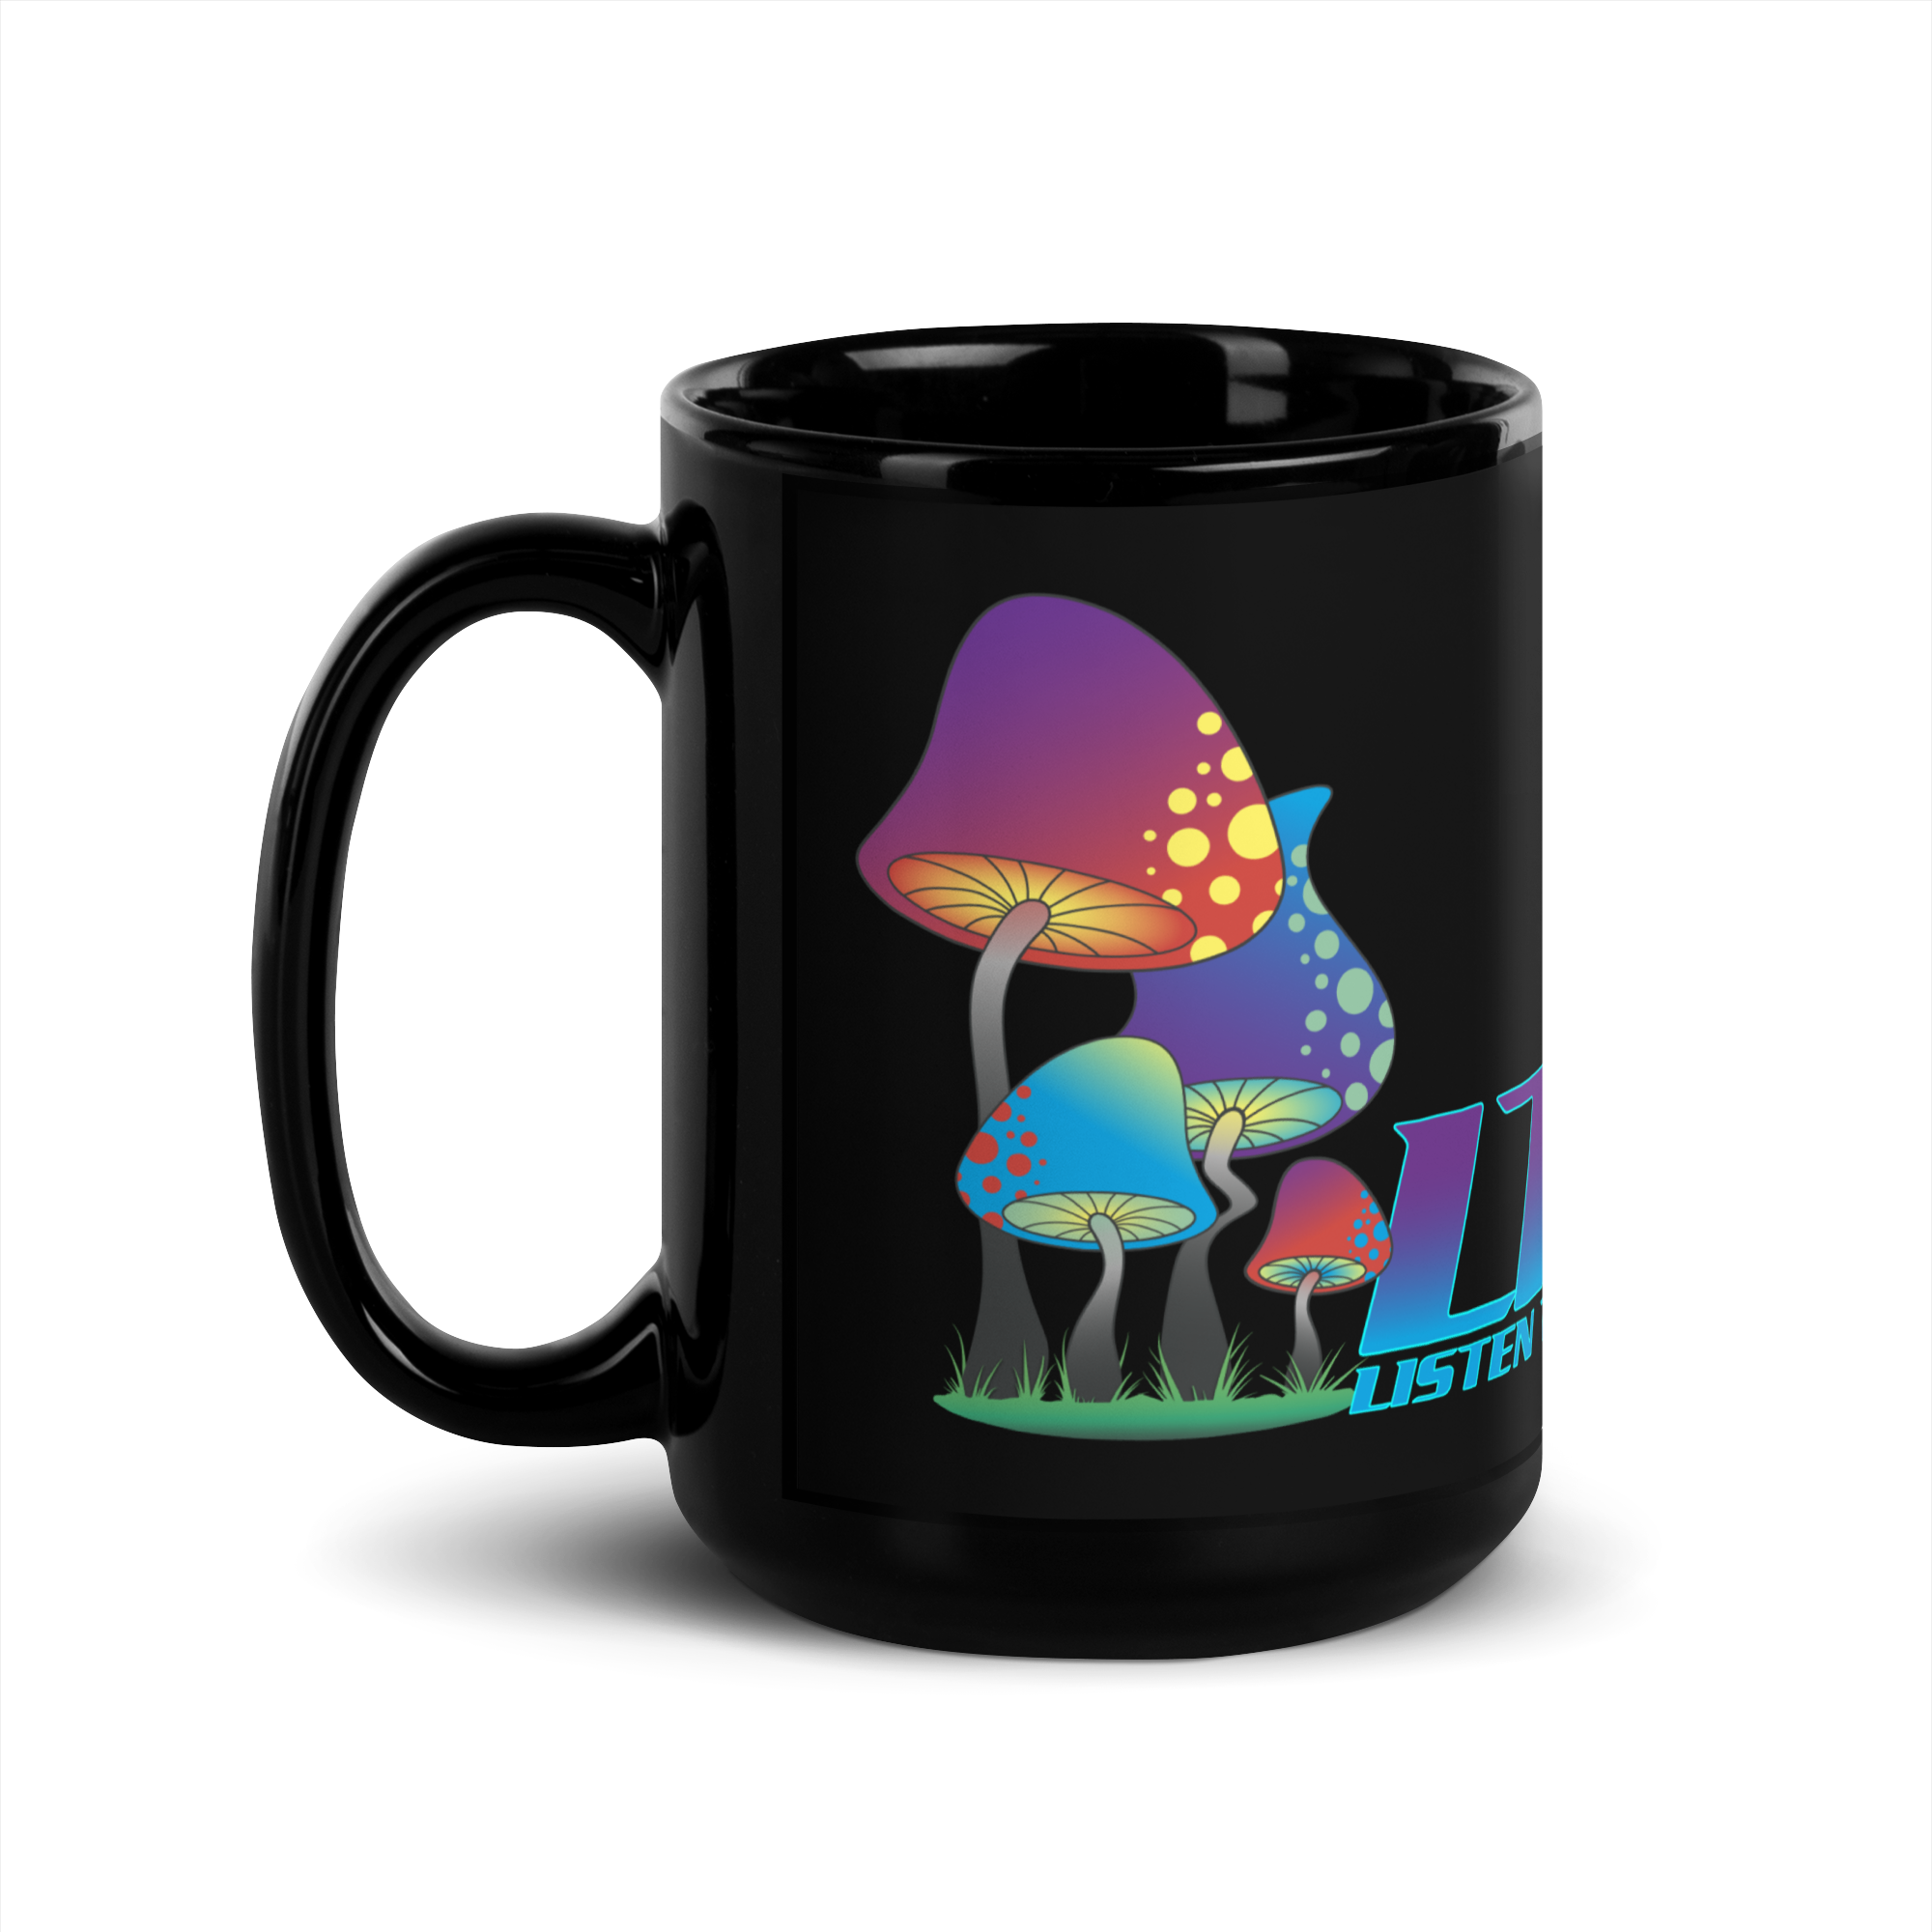 LTHM Mushroom Night Edition Mug